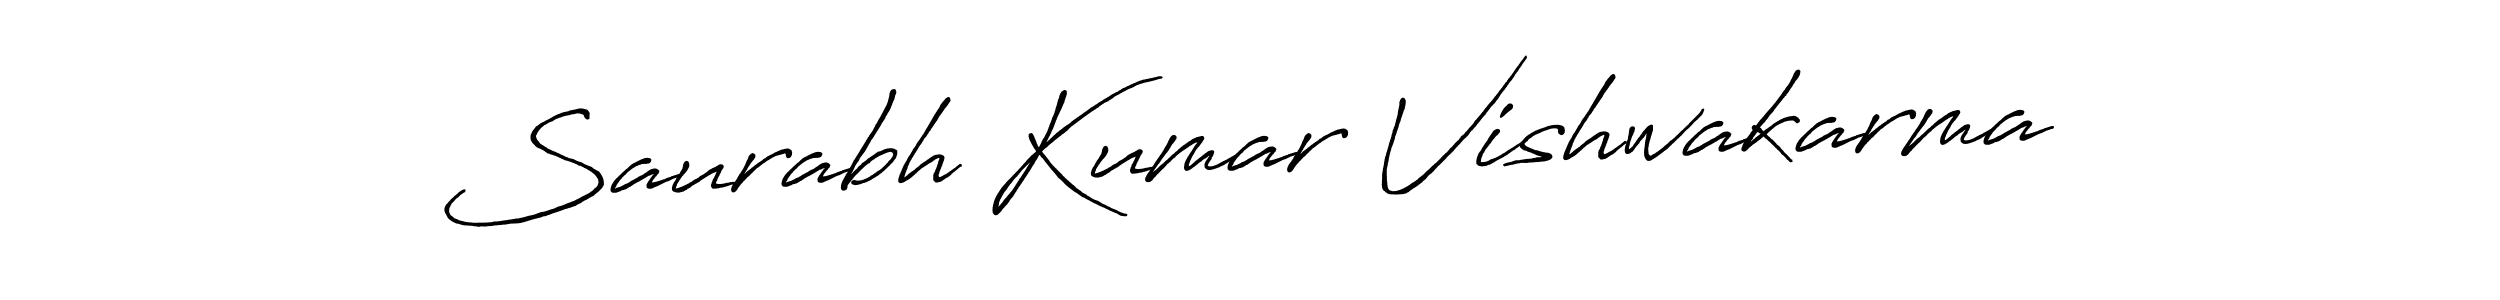 Best and Professional Signature Style for Saurabh Kumar Vishwakarma. Antro_Vectra_Bolder Best Signature Style Collection. Saurabh Kumar Vishwakarma signature style 7 images and pictures png